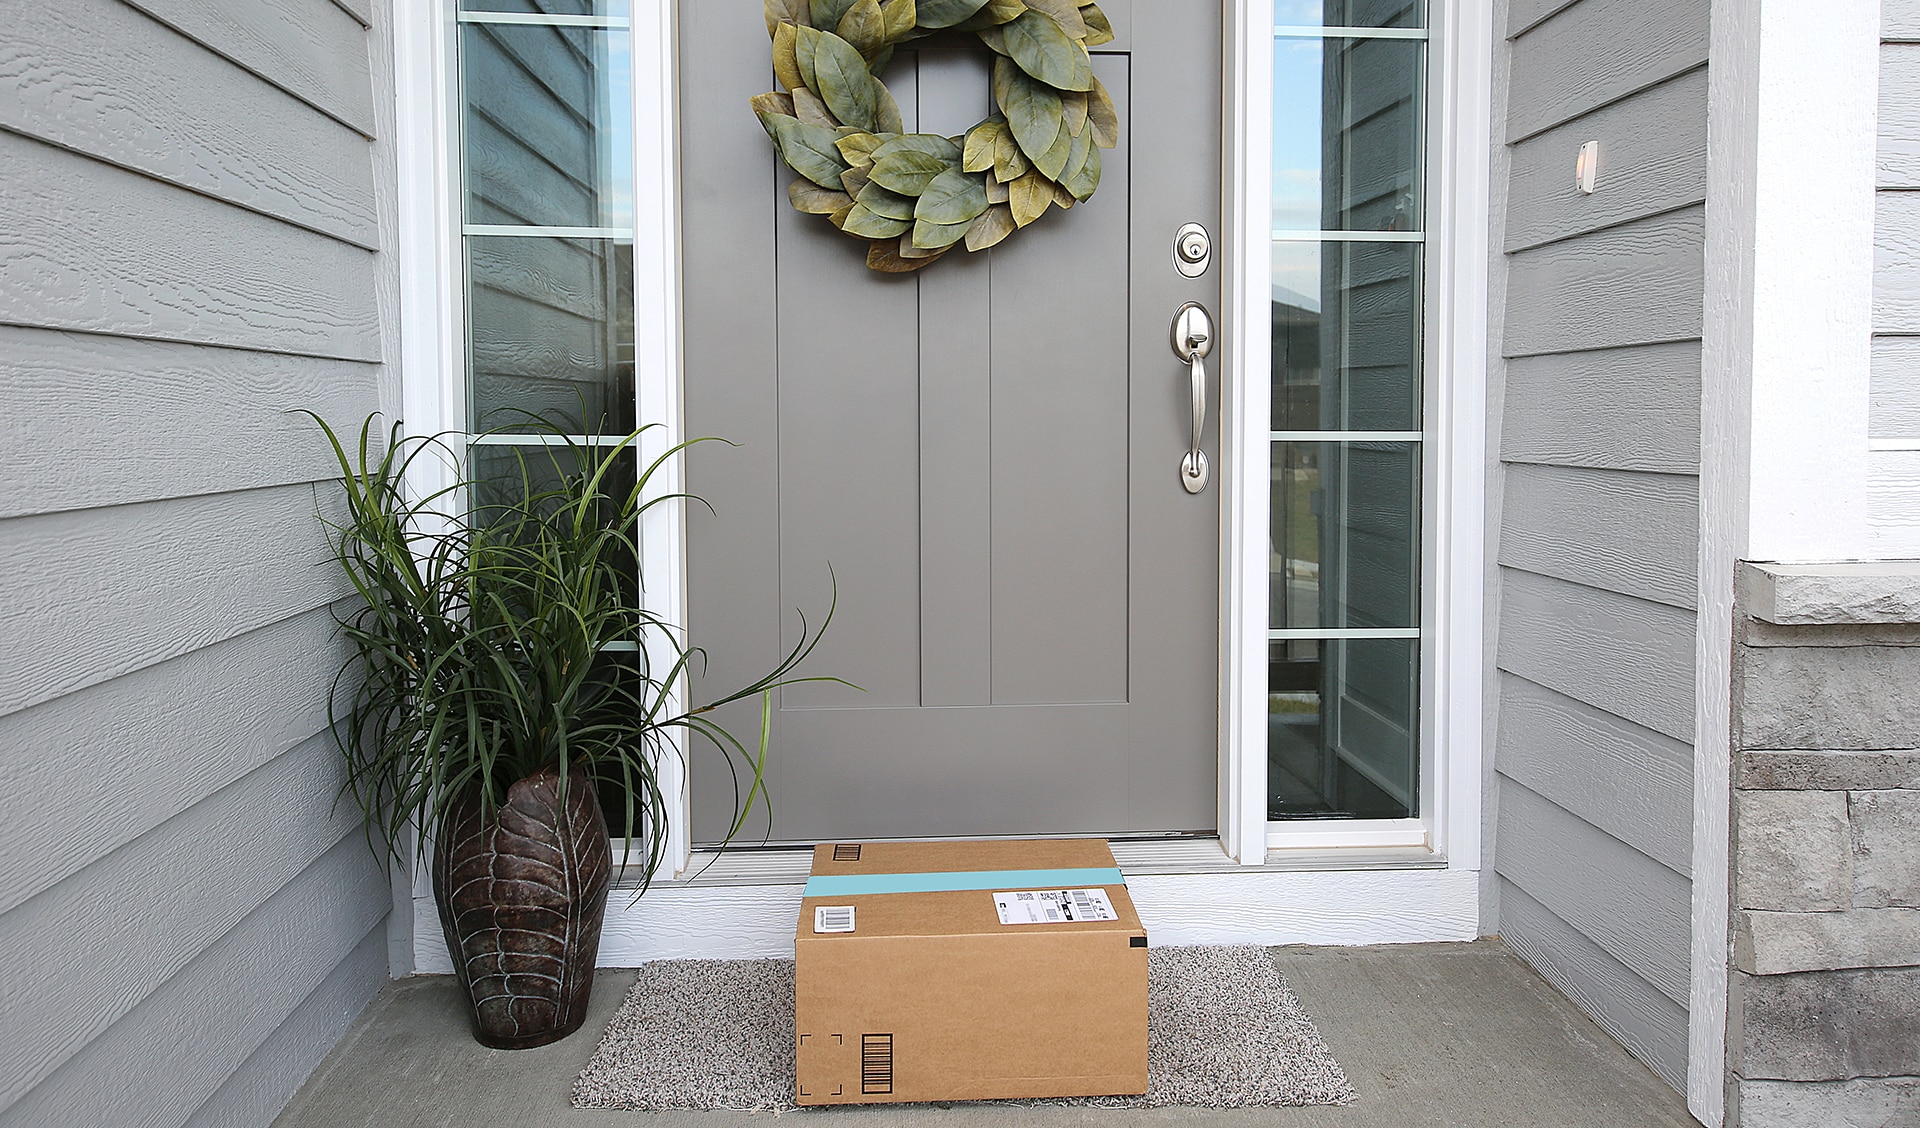 Box sitting on front doorstep